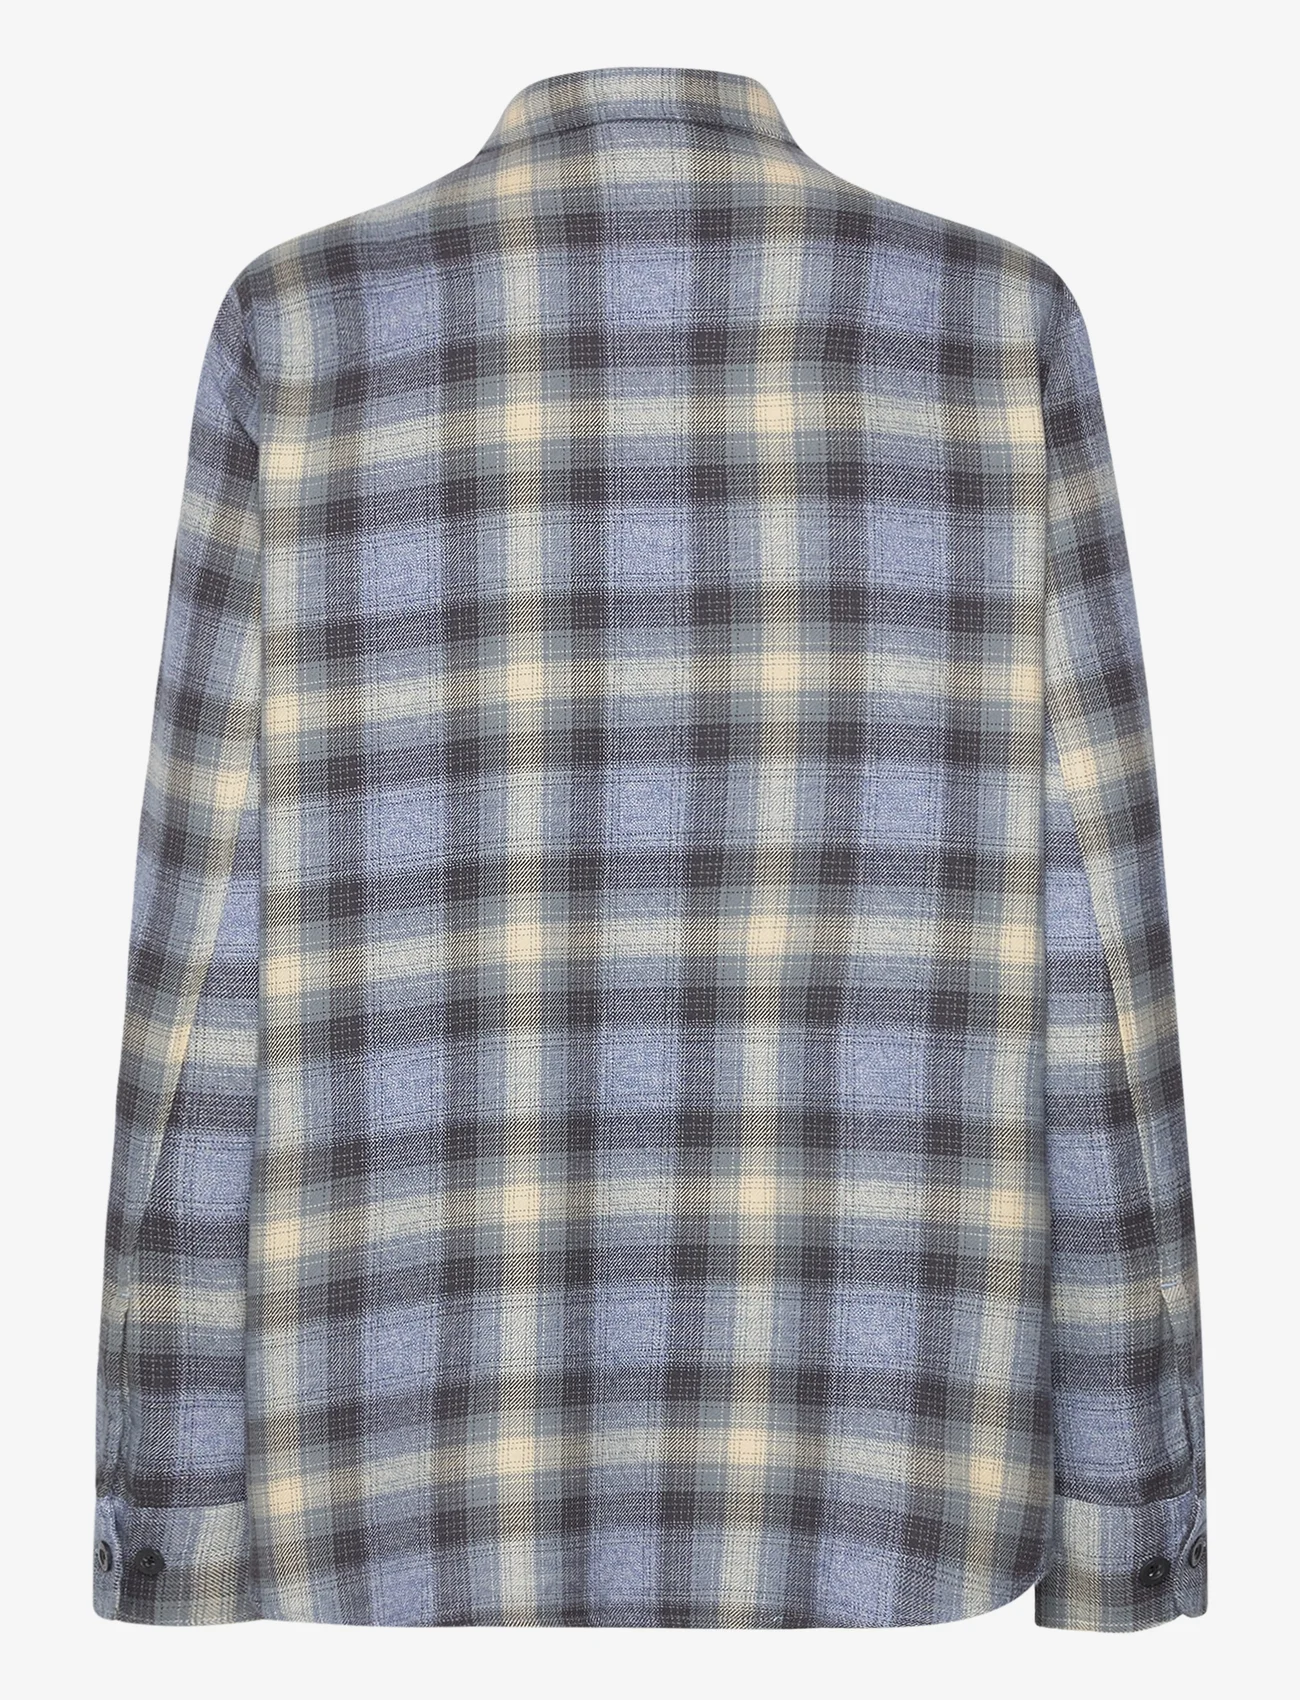 Peak Performance - W Cotton Flannel Shirt-142 CHECK - long-sleeved shirts - 142 check - 1